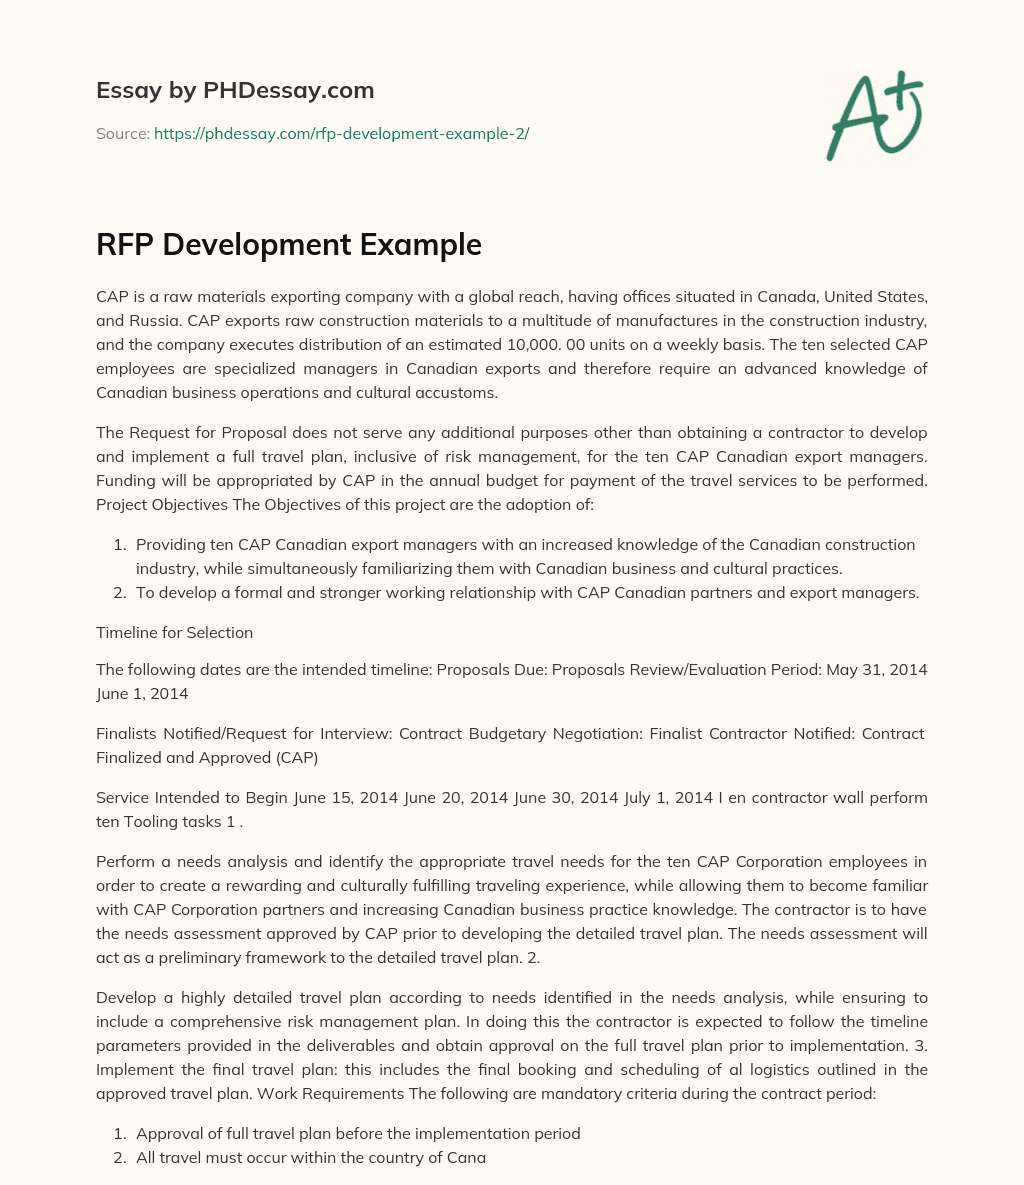 RFP Development Example essay